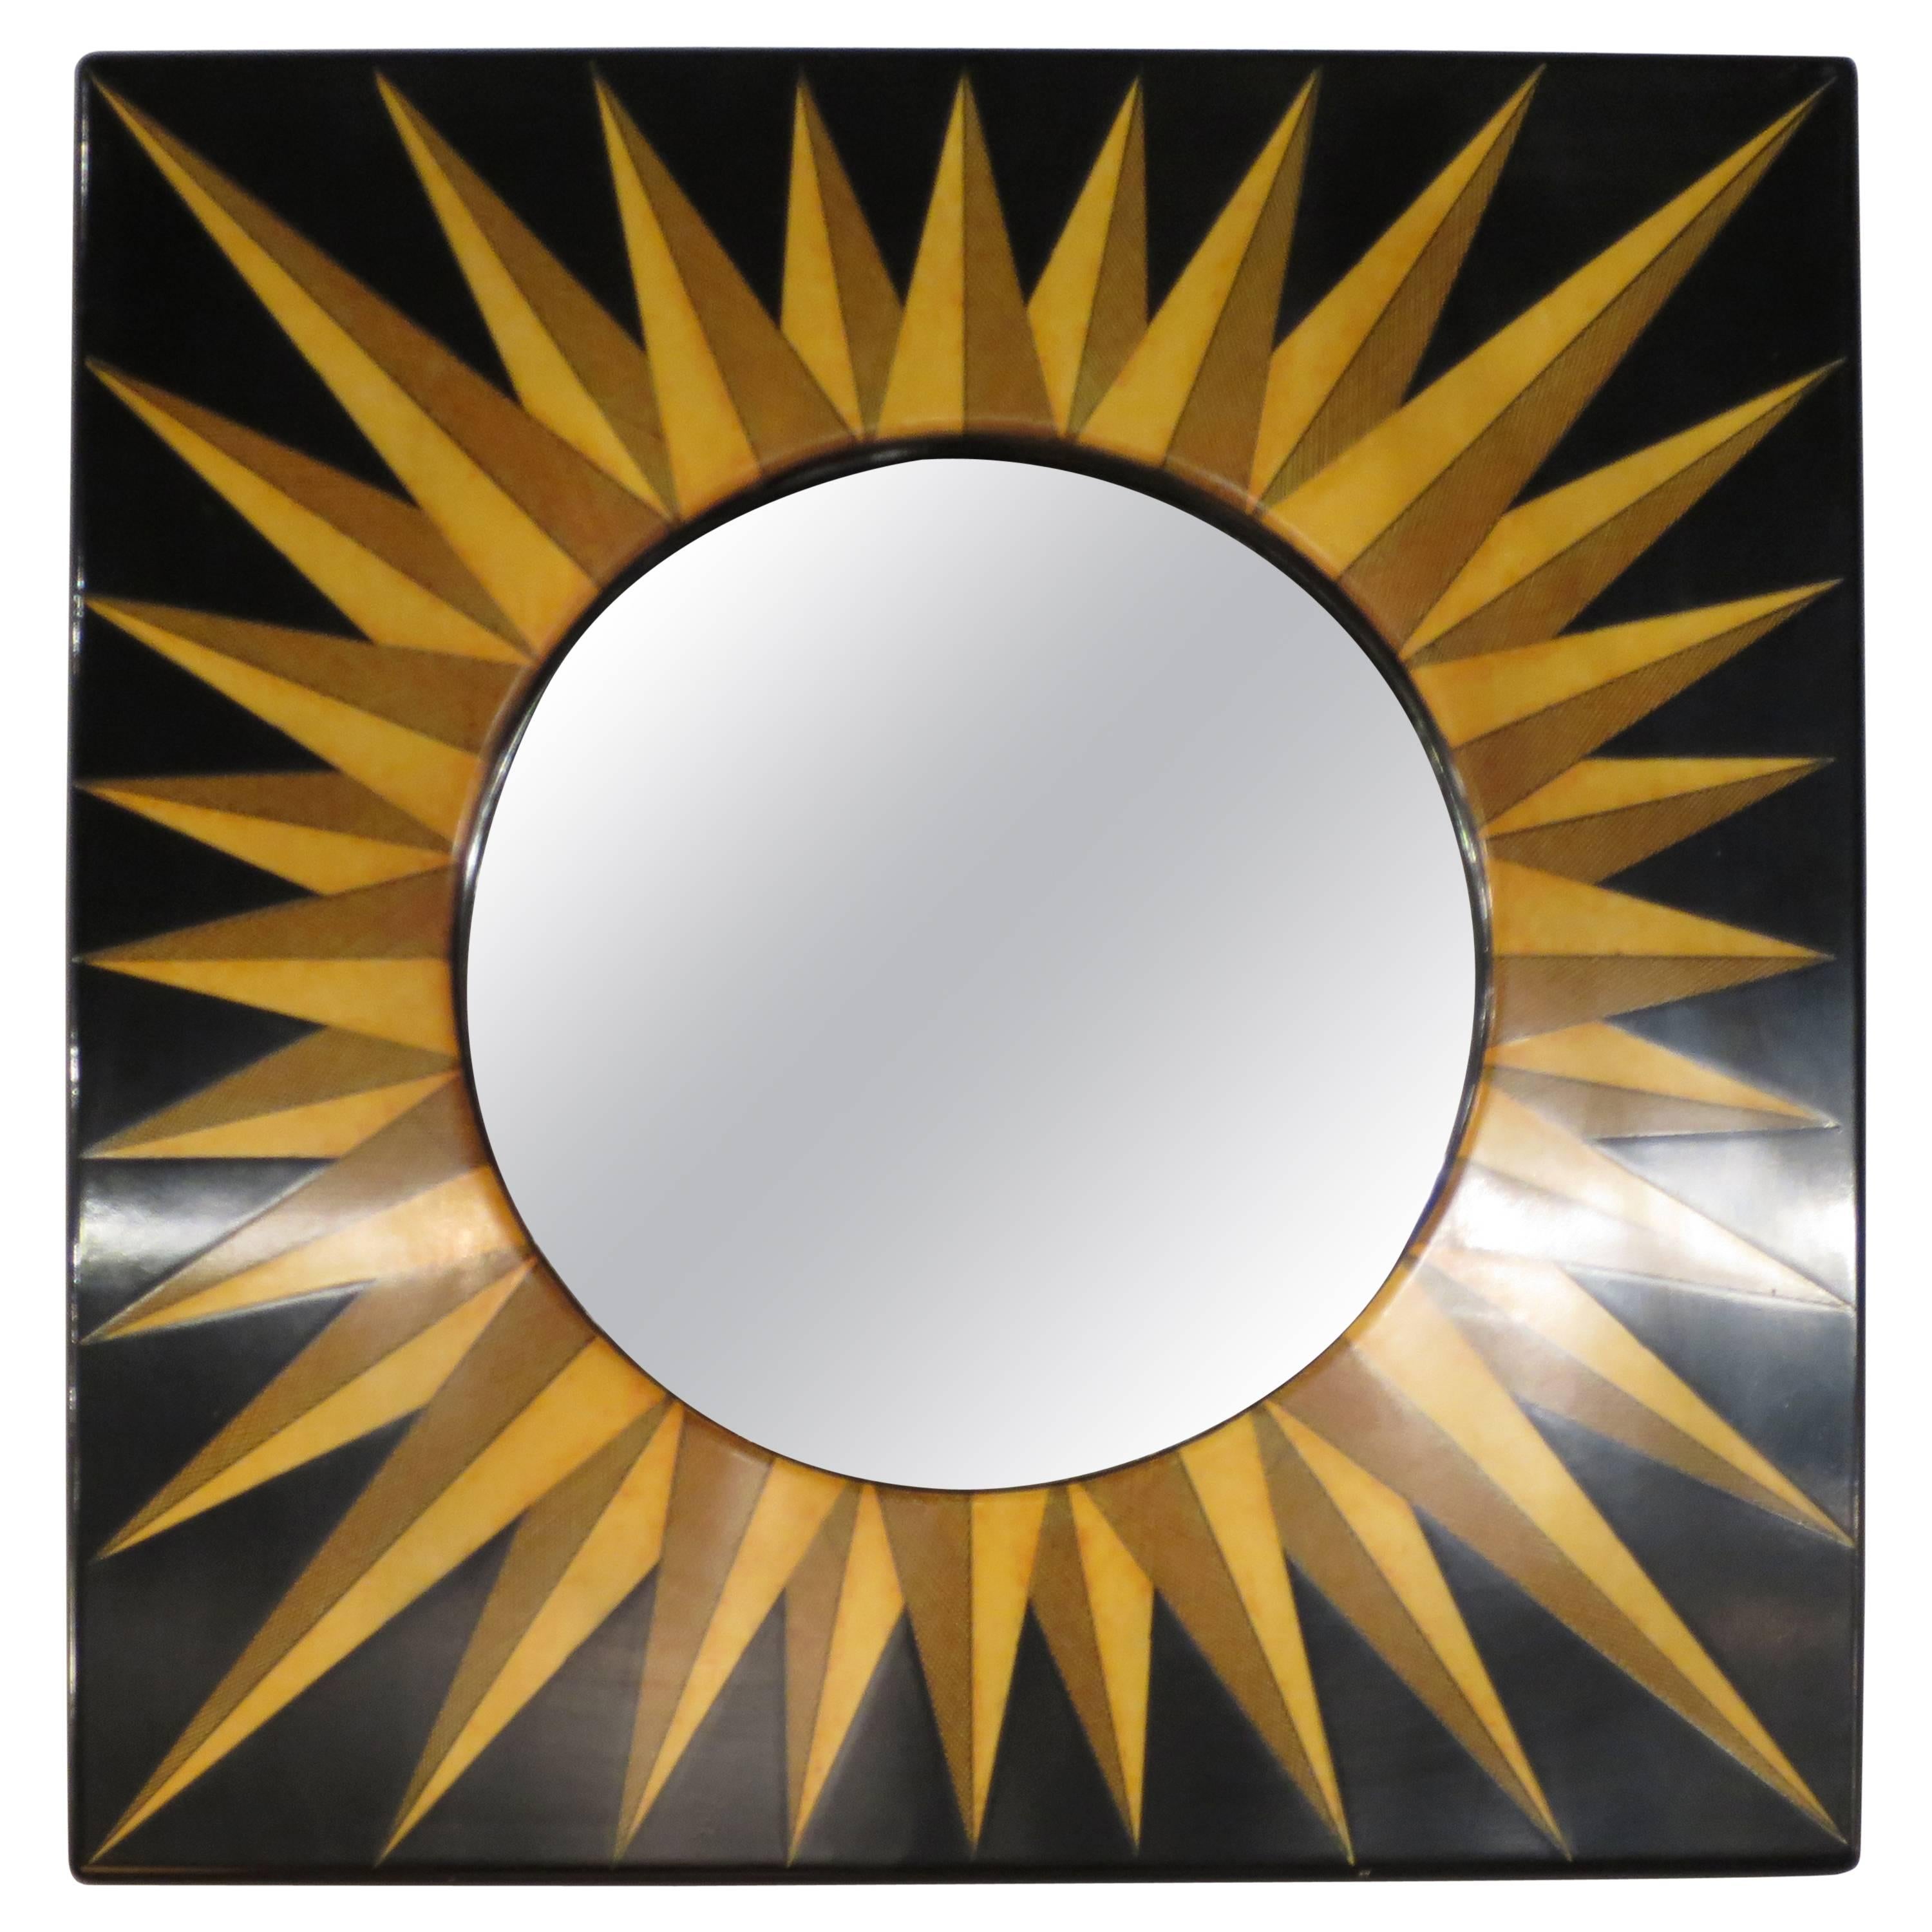 Sunburst Mirror by Fornasetti